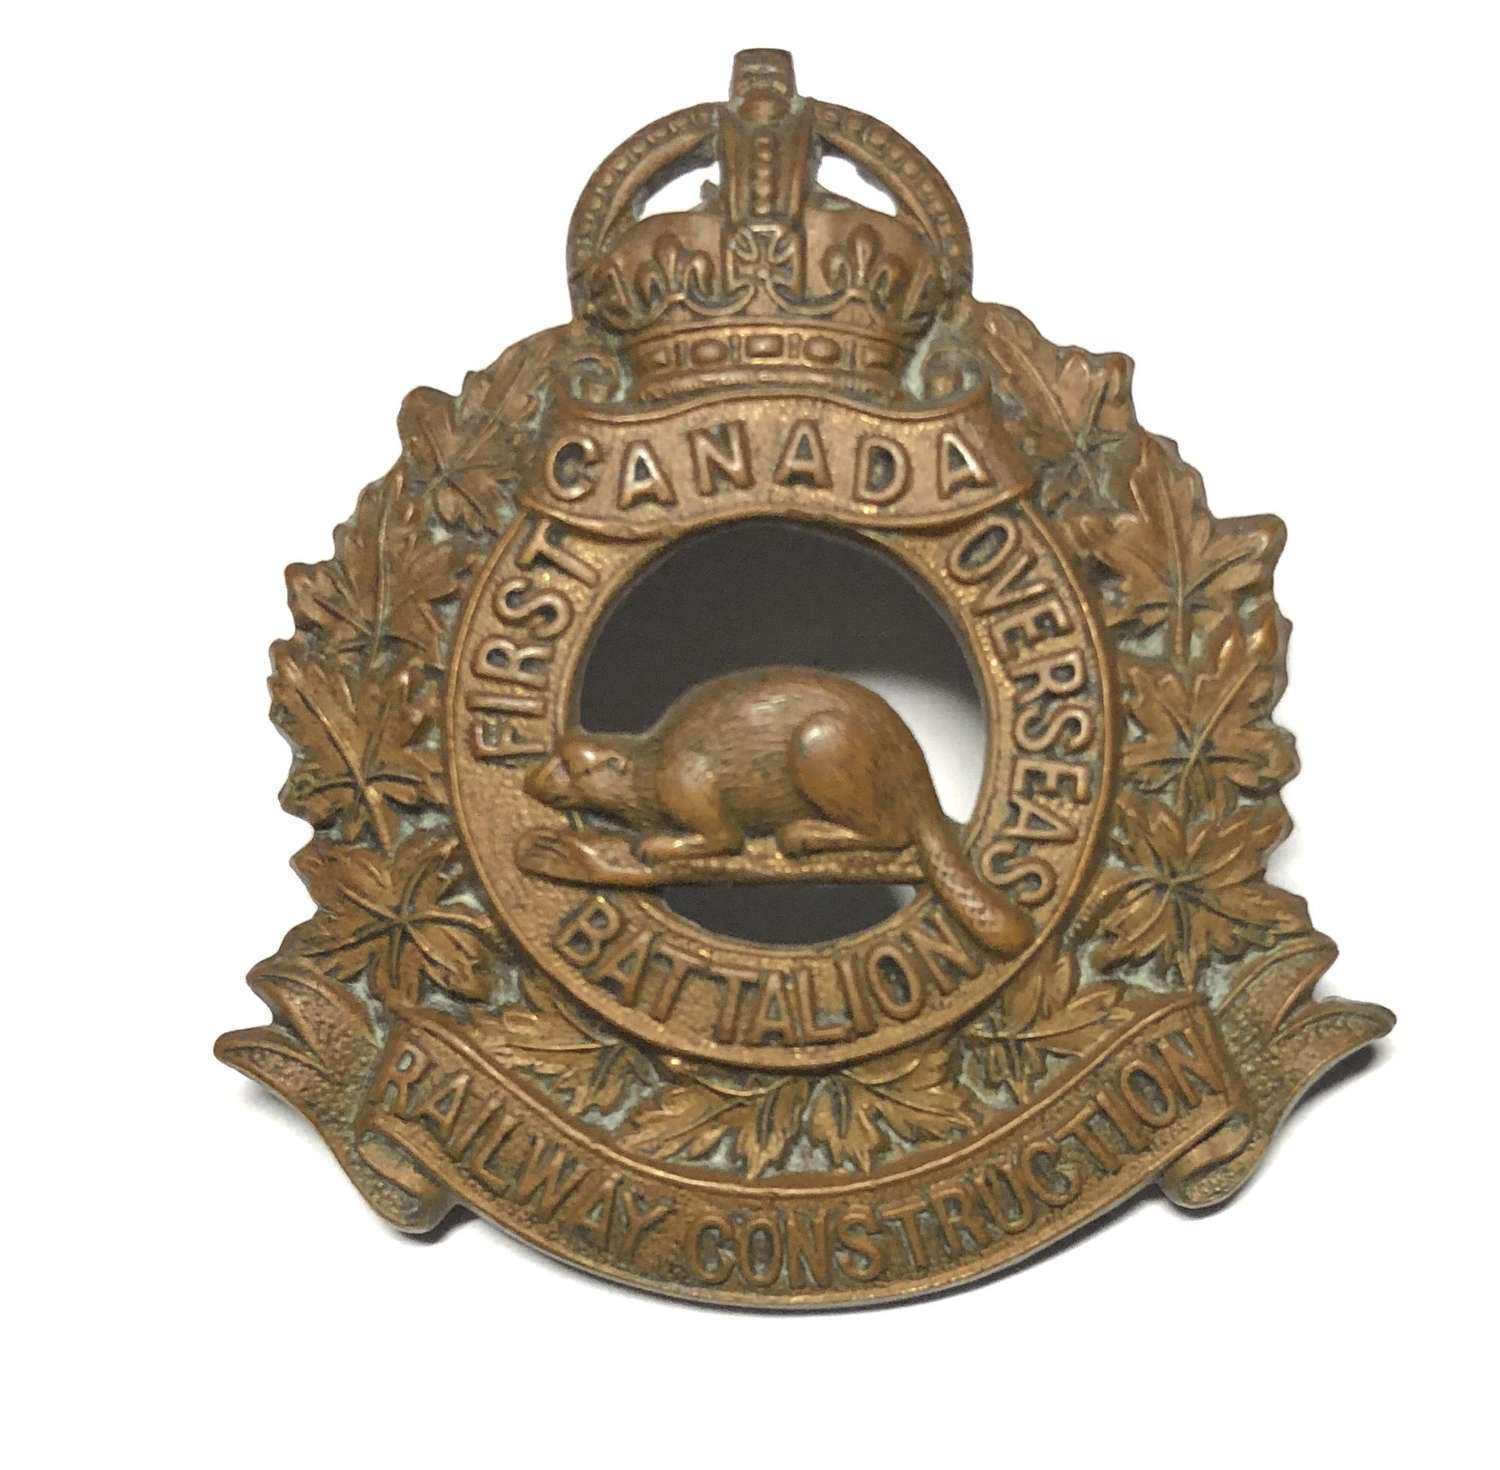 Canada. 1st Railway Construction Bn CEF WWI cap badge